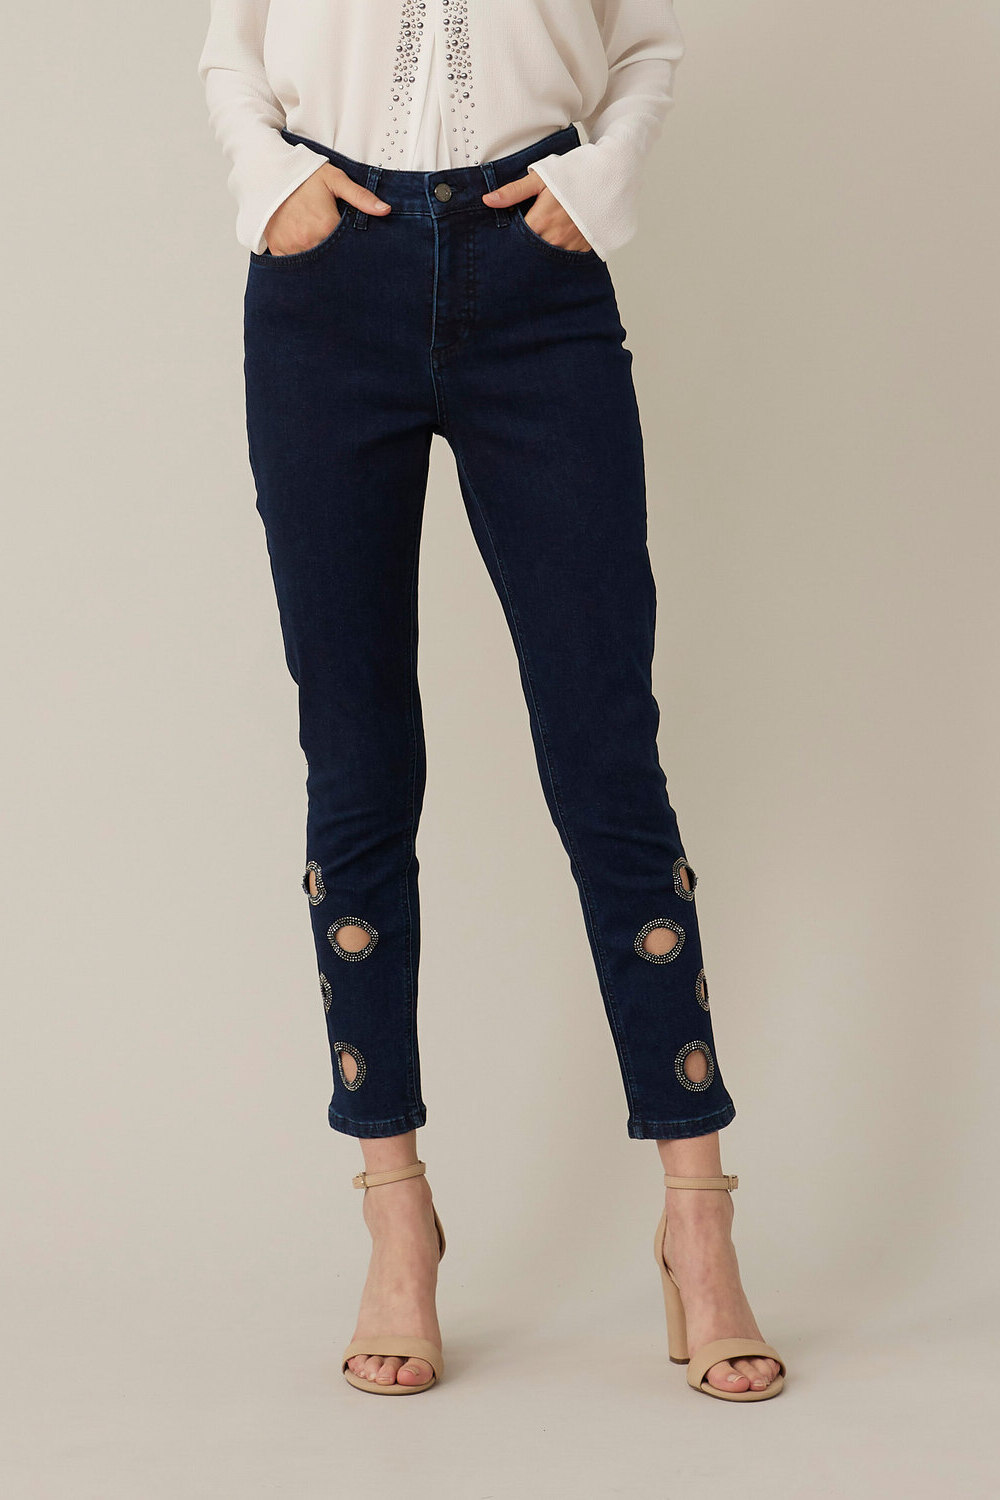 Joseph Ribkoff Cut-Out Jeans Style 221942. Dark Denim Blue